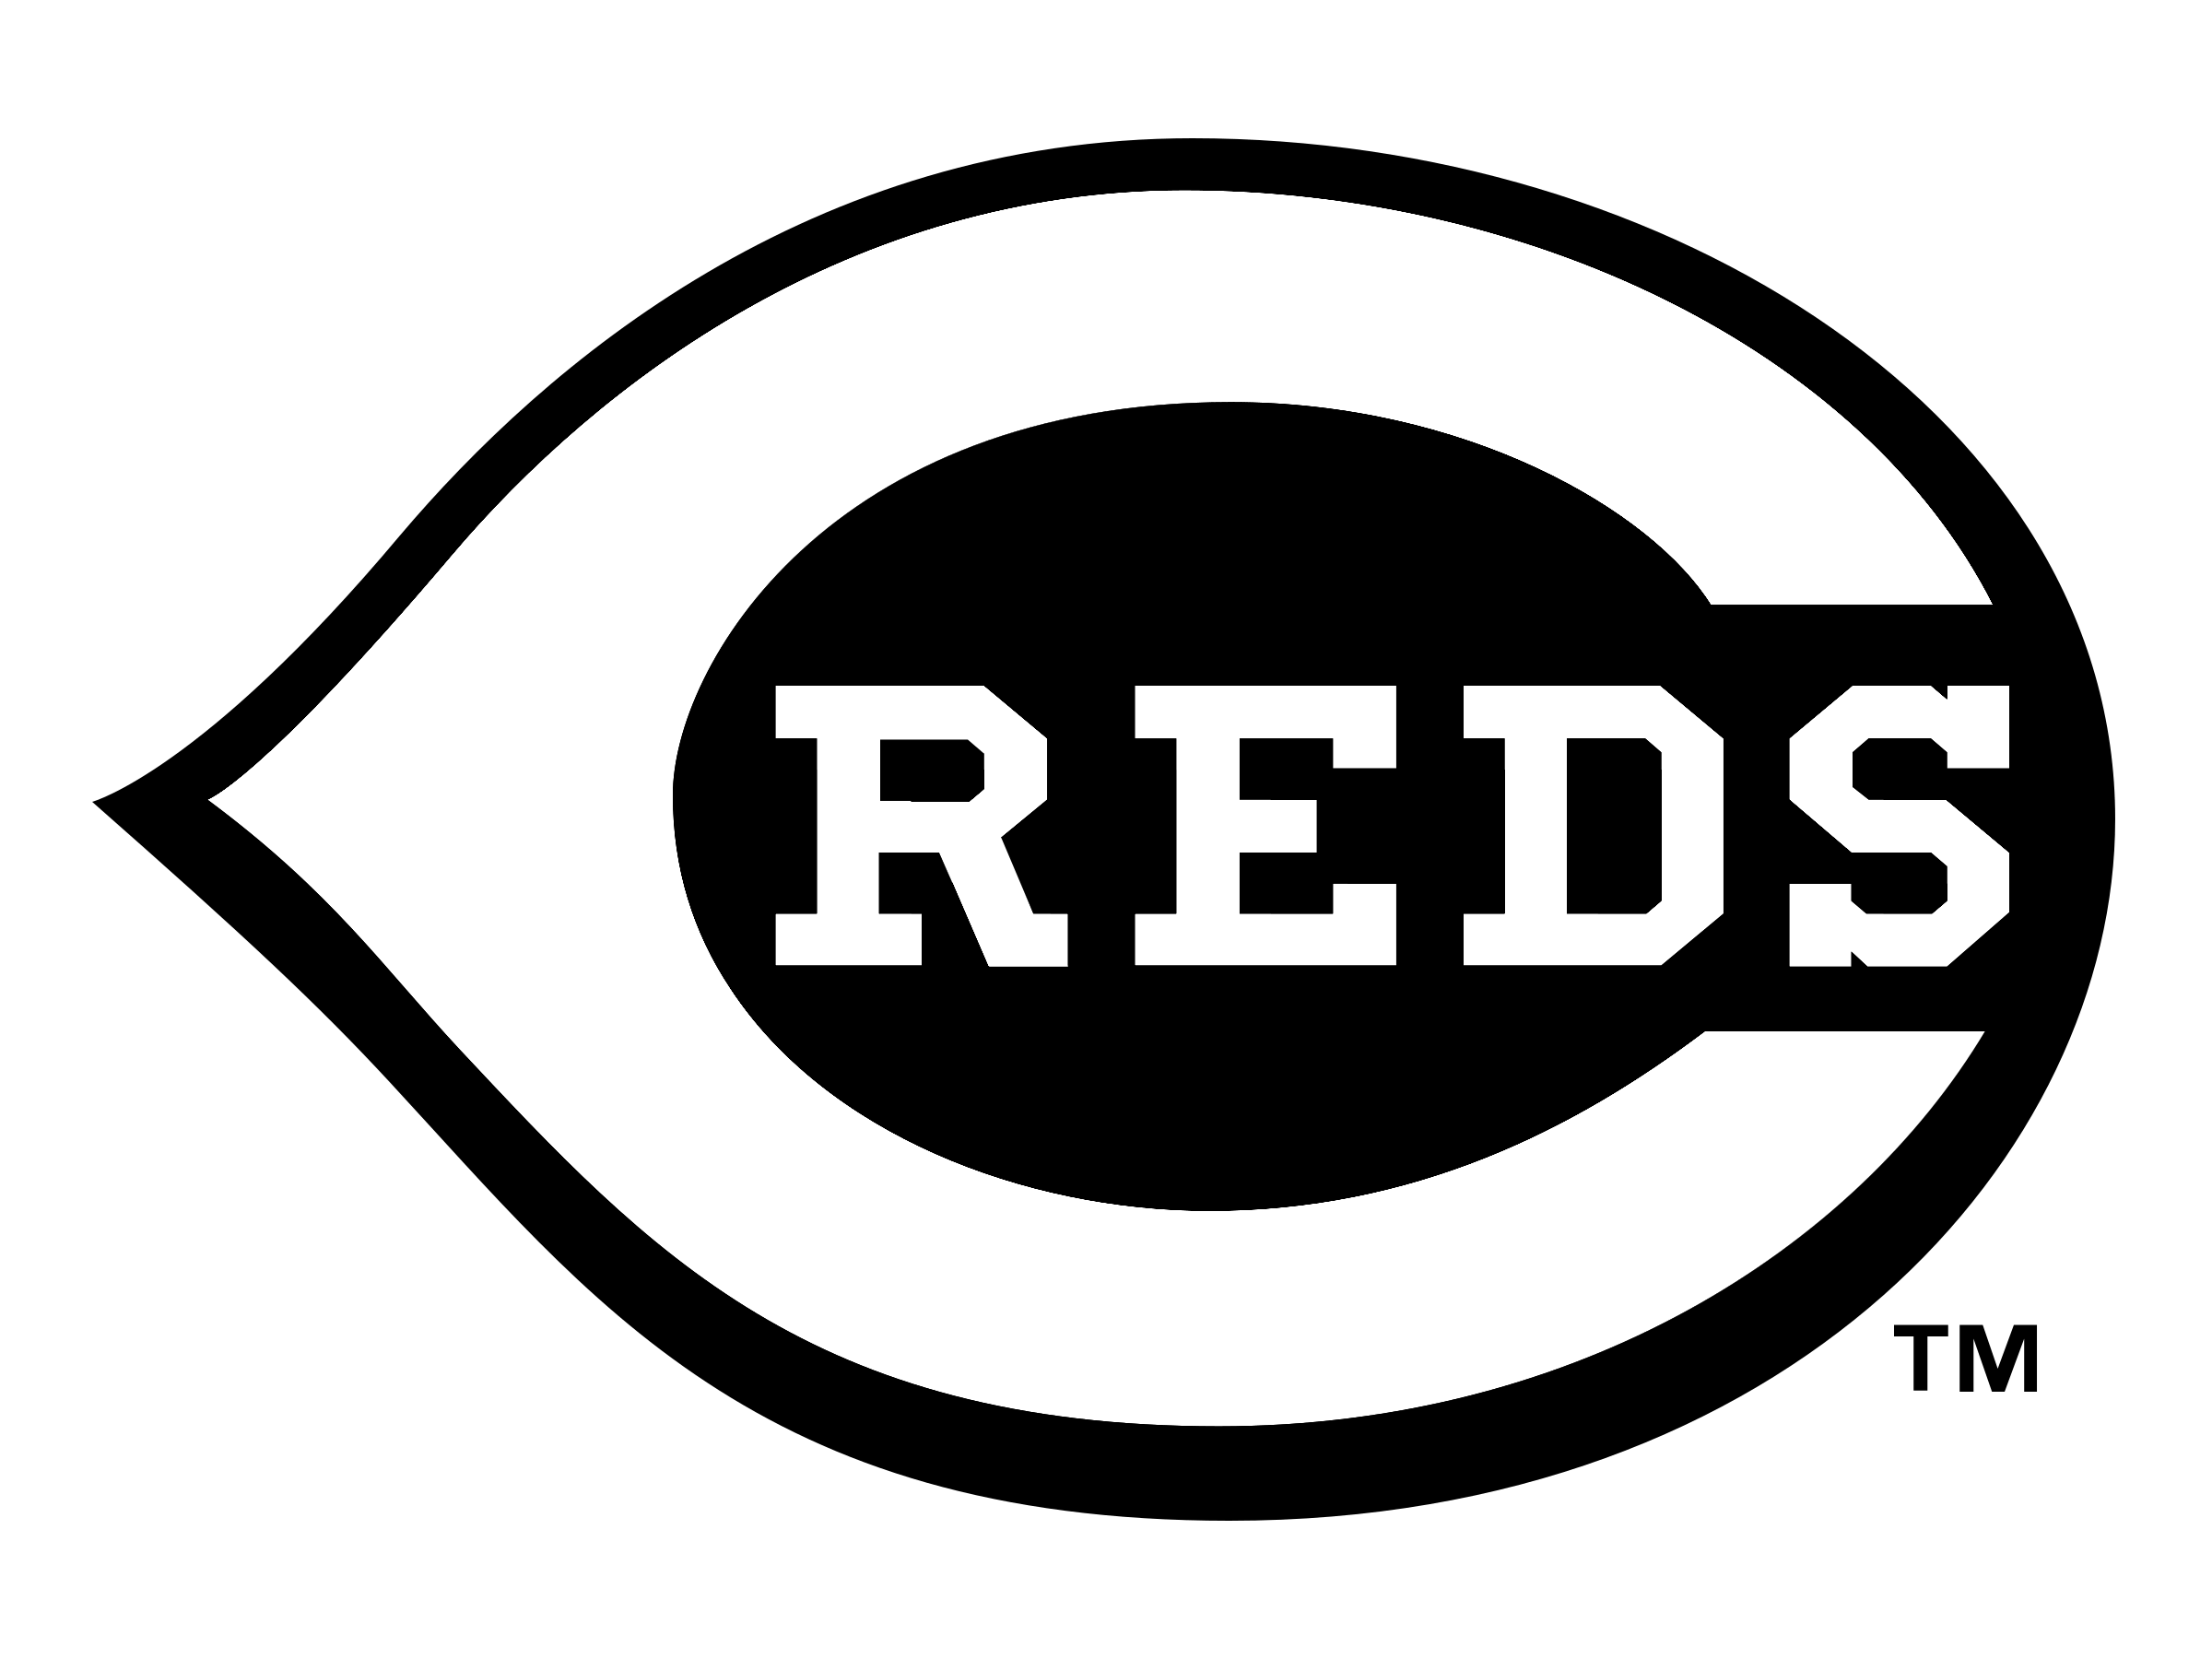 Cinn Logo - Cincinnati Reds Logo PNG Transparent & SVG Vector - Freebie Supply